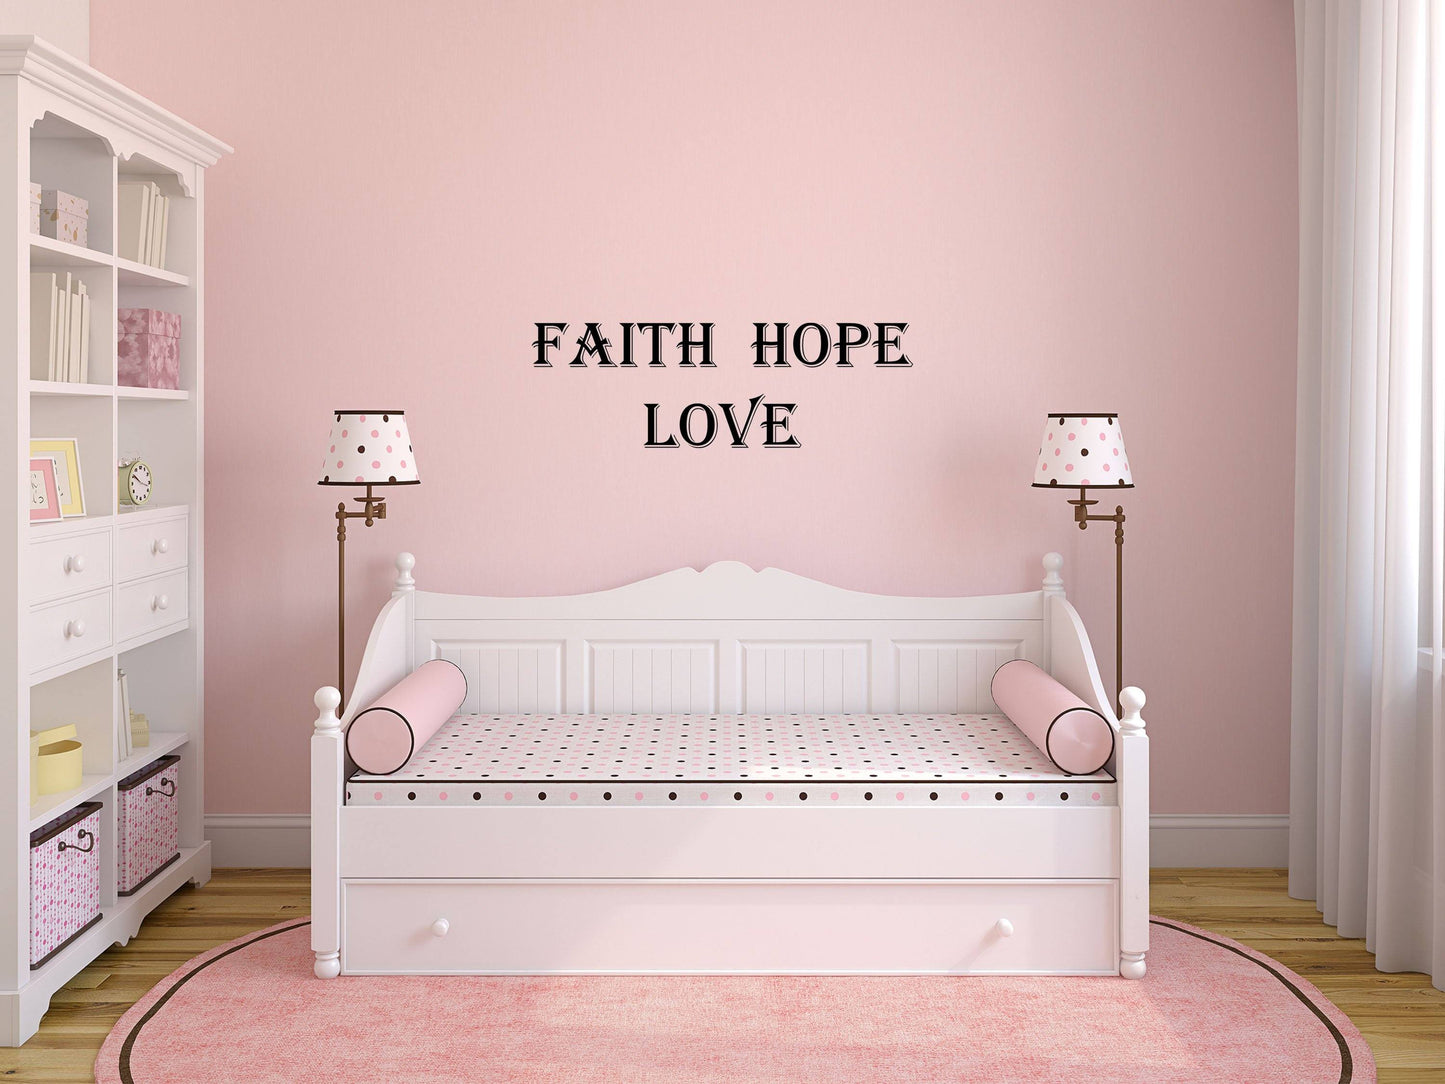 Faith, Hope, Love - Inspirational Wall Decals Vinyl Wall Decal Inspirational Wall Signs 